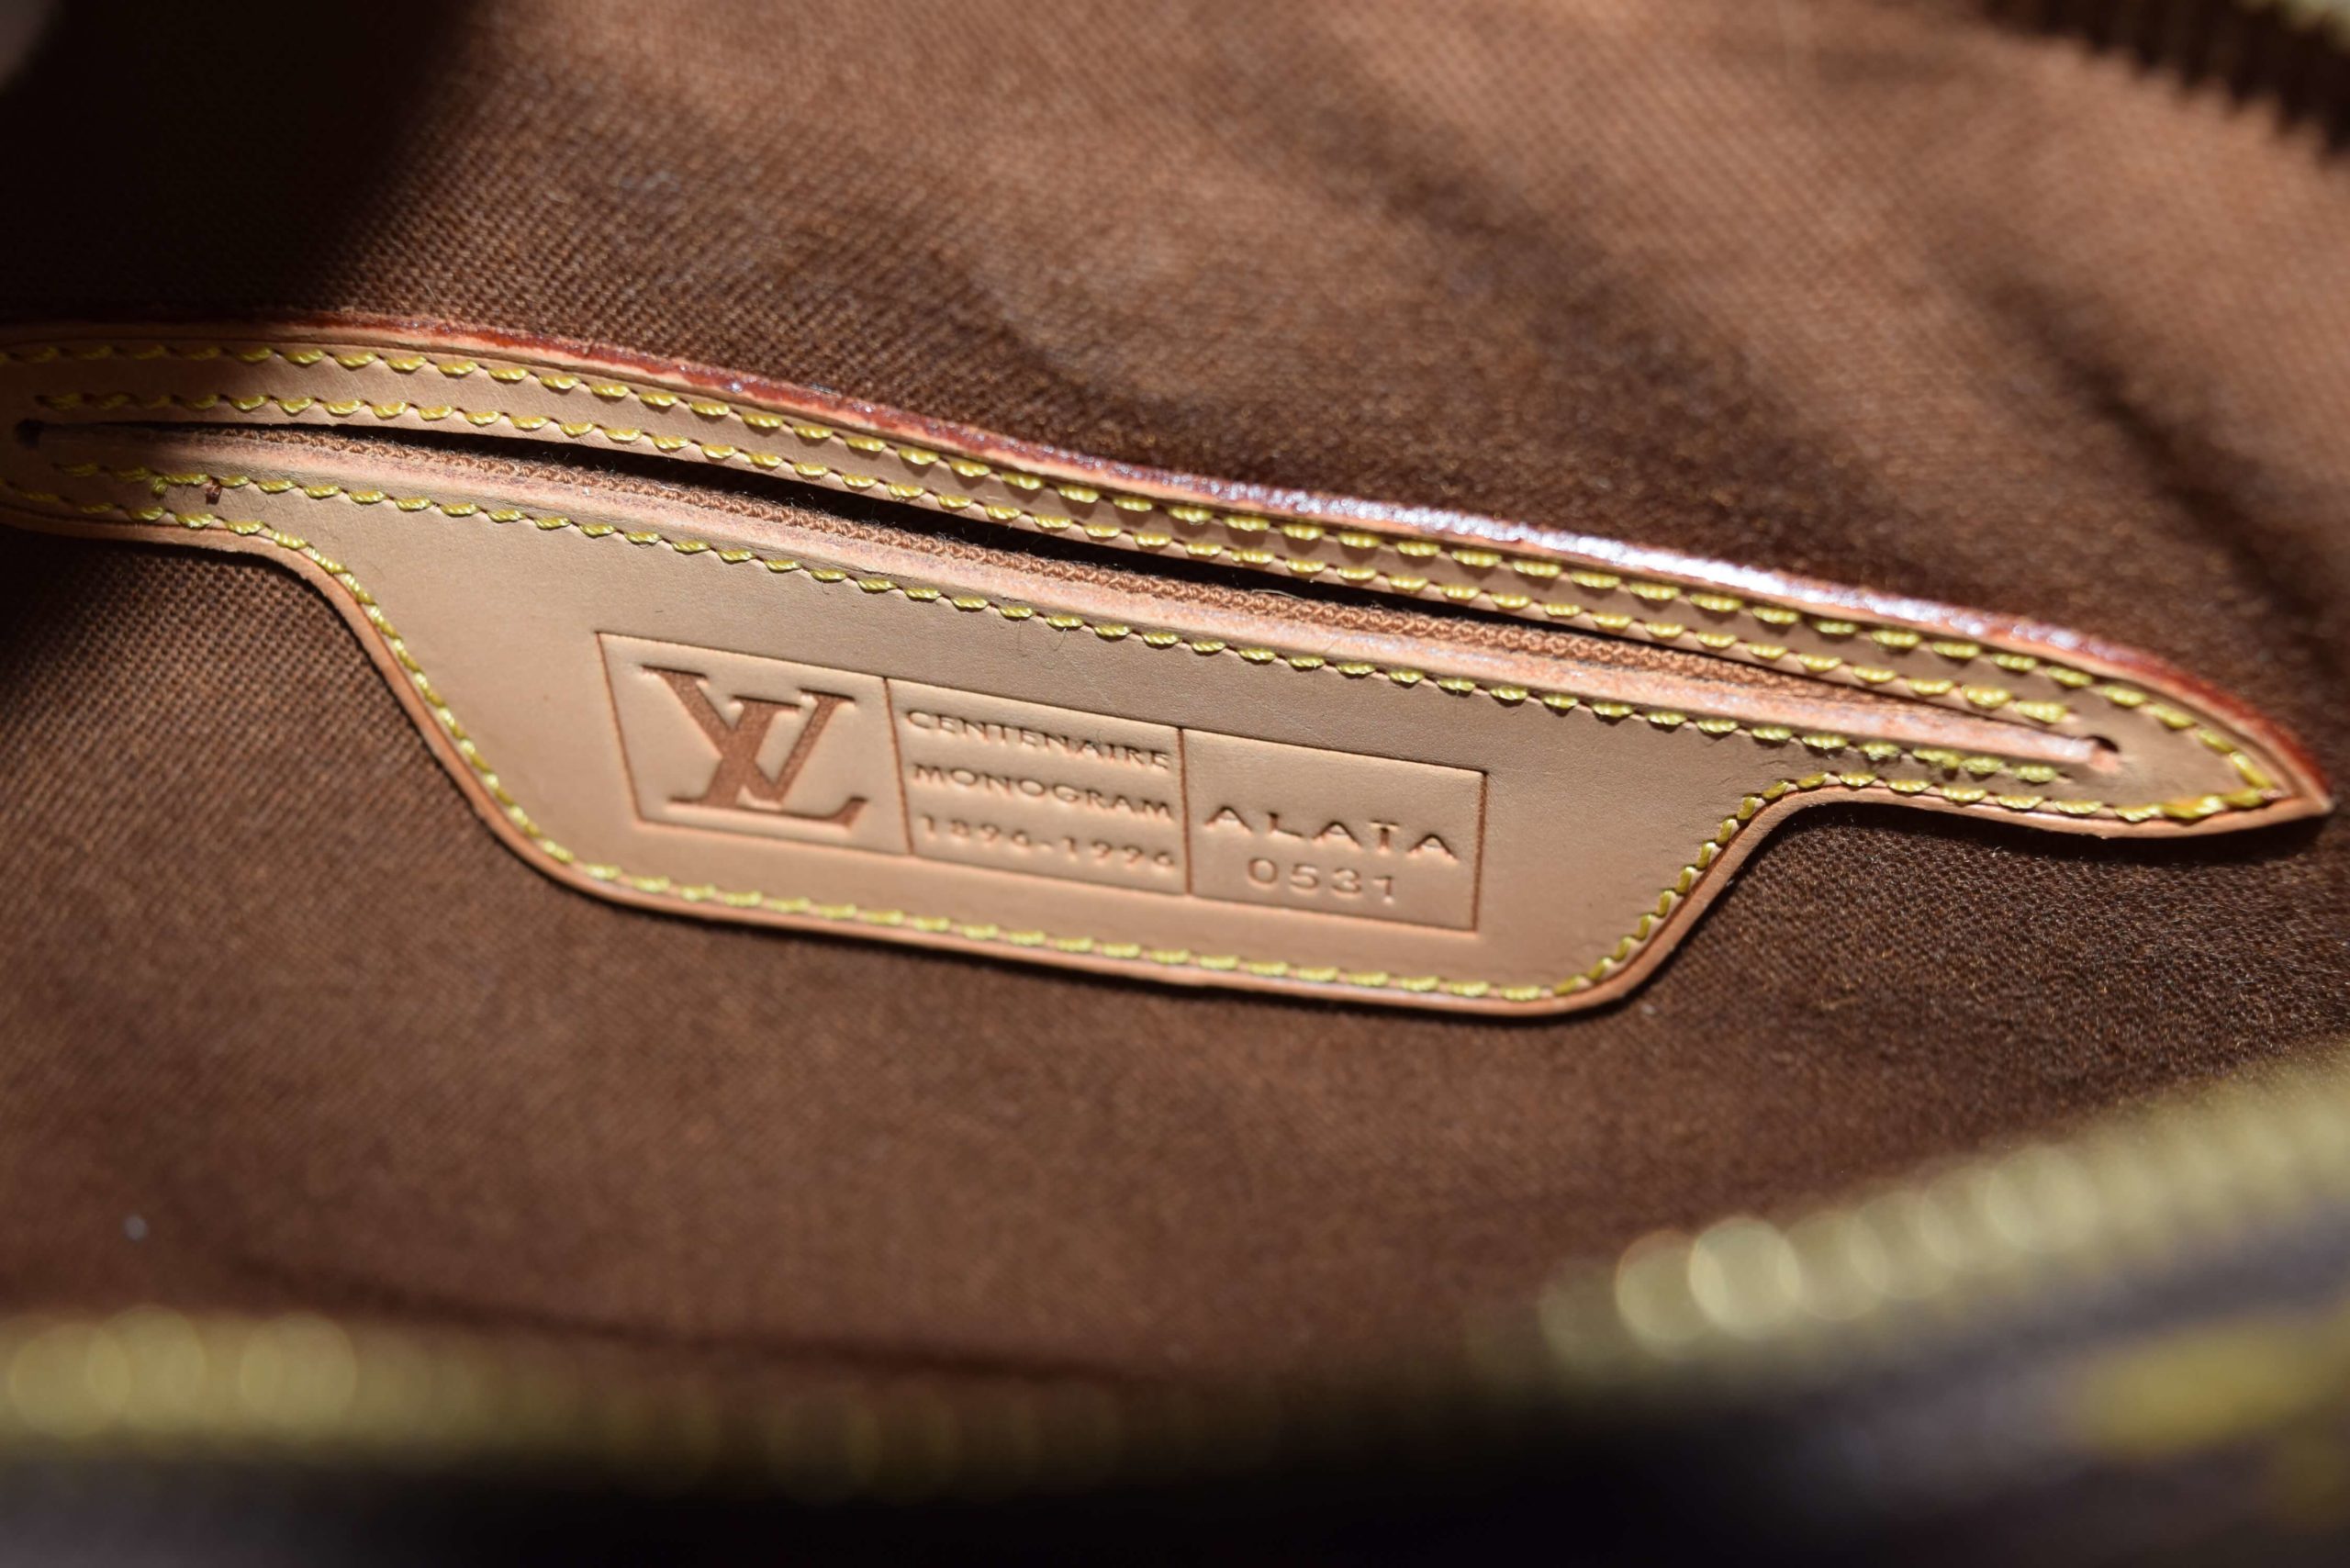 Louis Vuitton Alma Handbag Azzedine Alaia Monogram Leopard Bag M99032